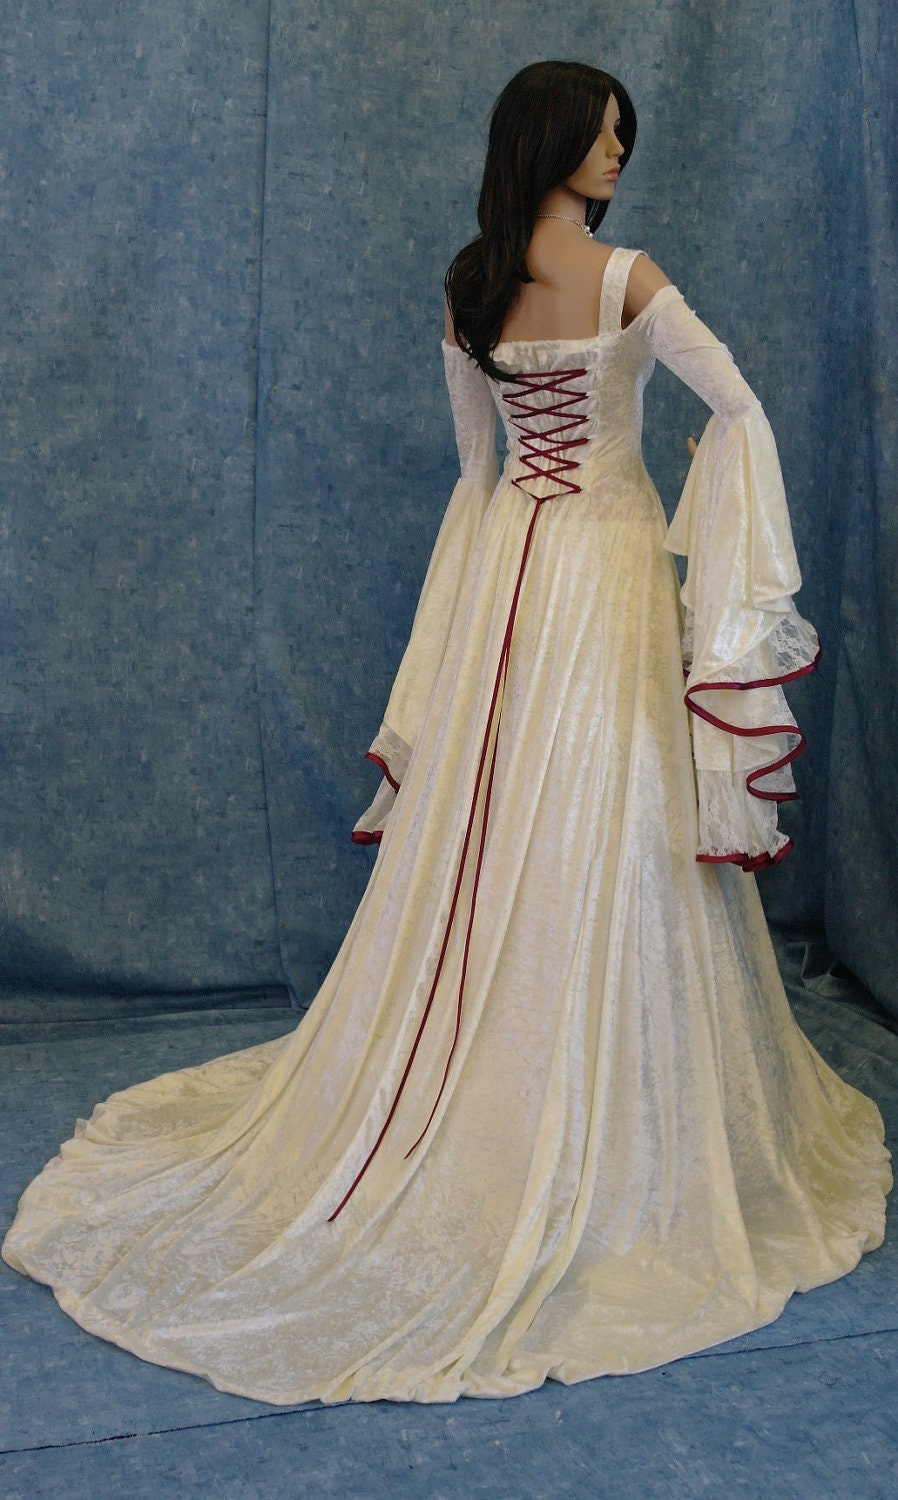 Renaissance dress medieval wedding dress by camelotcostumes